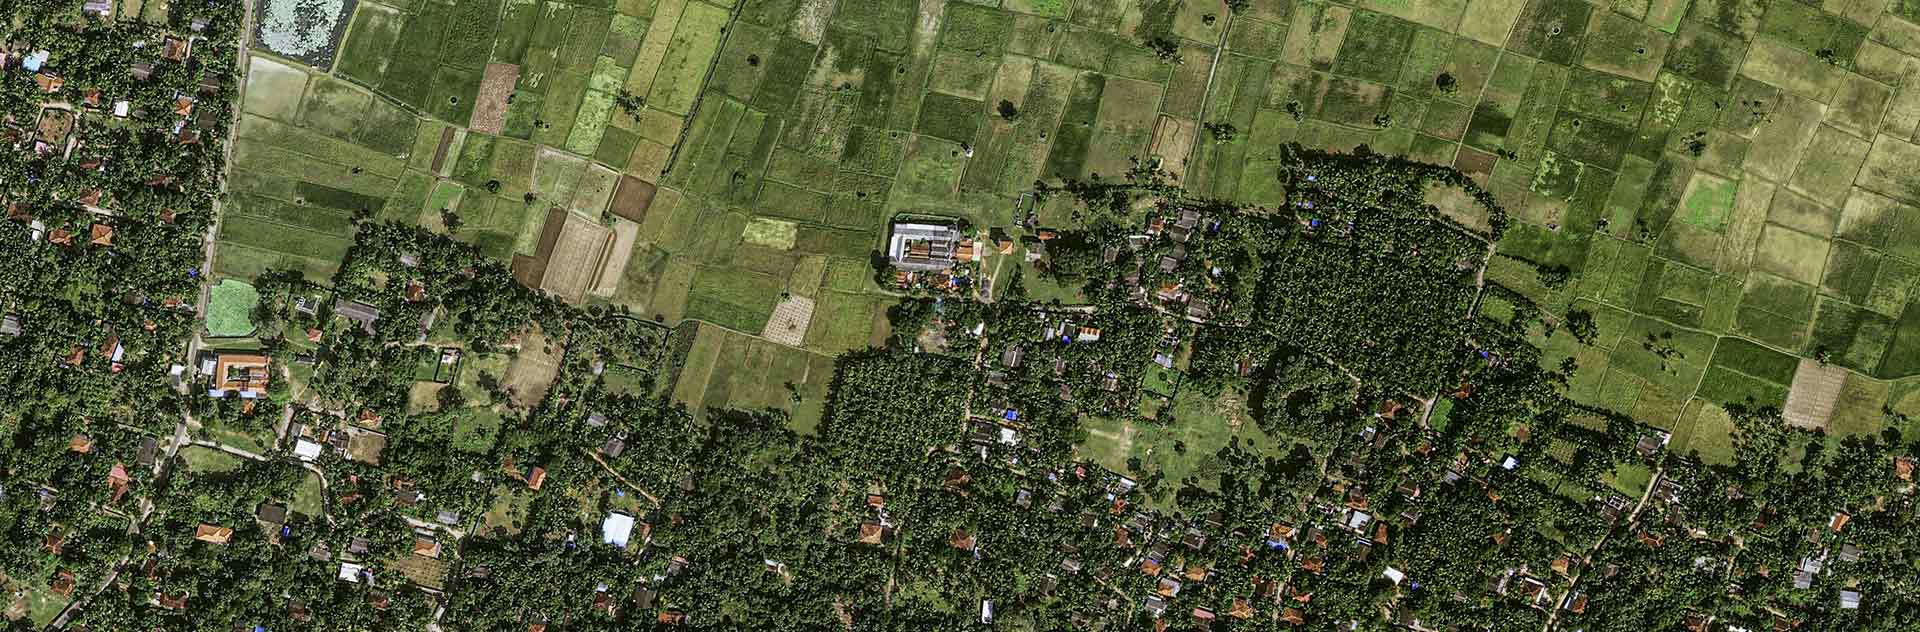 Pléiades Neo image satellite - Coconut Plantation - Sri Lanka, Manipay 30cm resolution